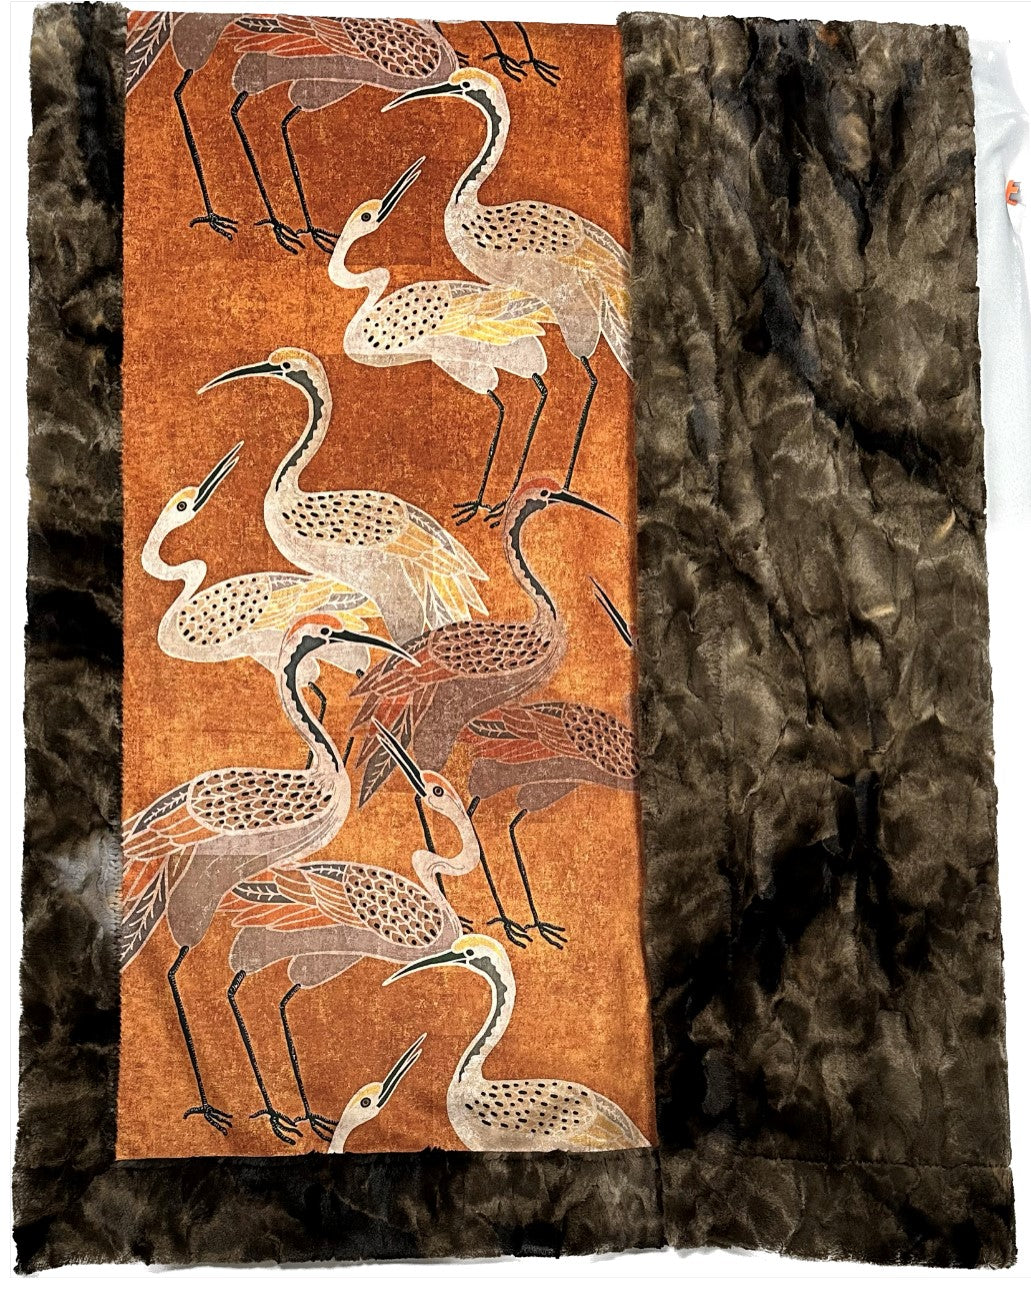 Cranes Golden Hour Festival on Brown Rabbit Tye-Dye Adult Size Blanket 54x77 Spoonflower Quality